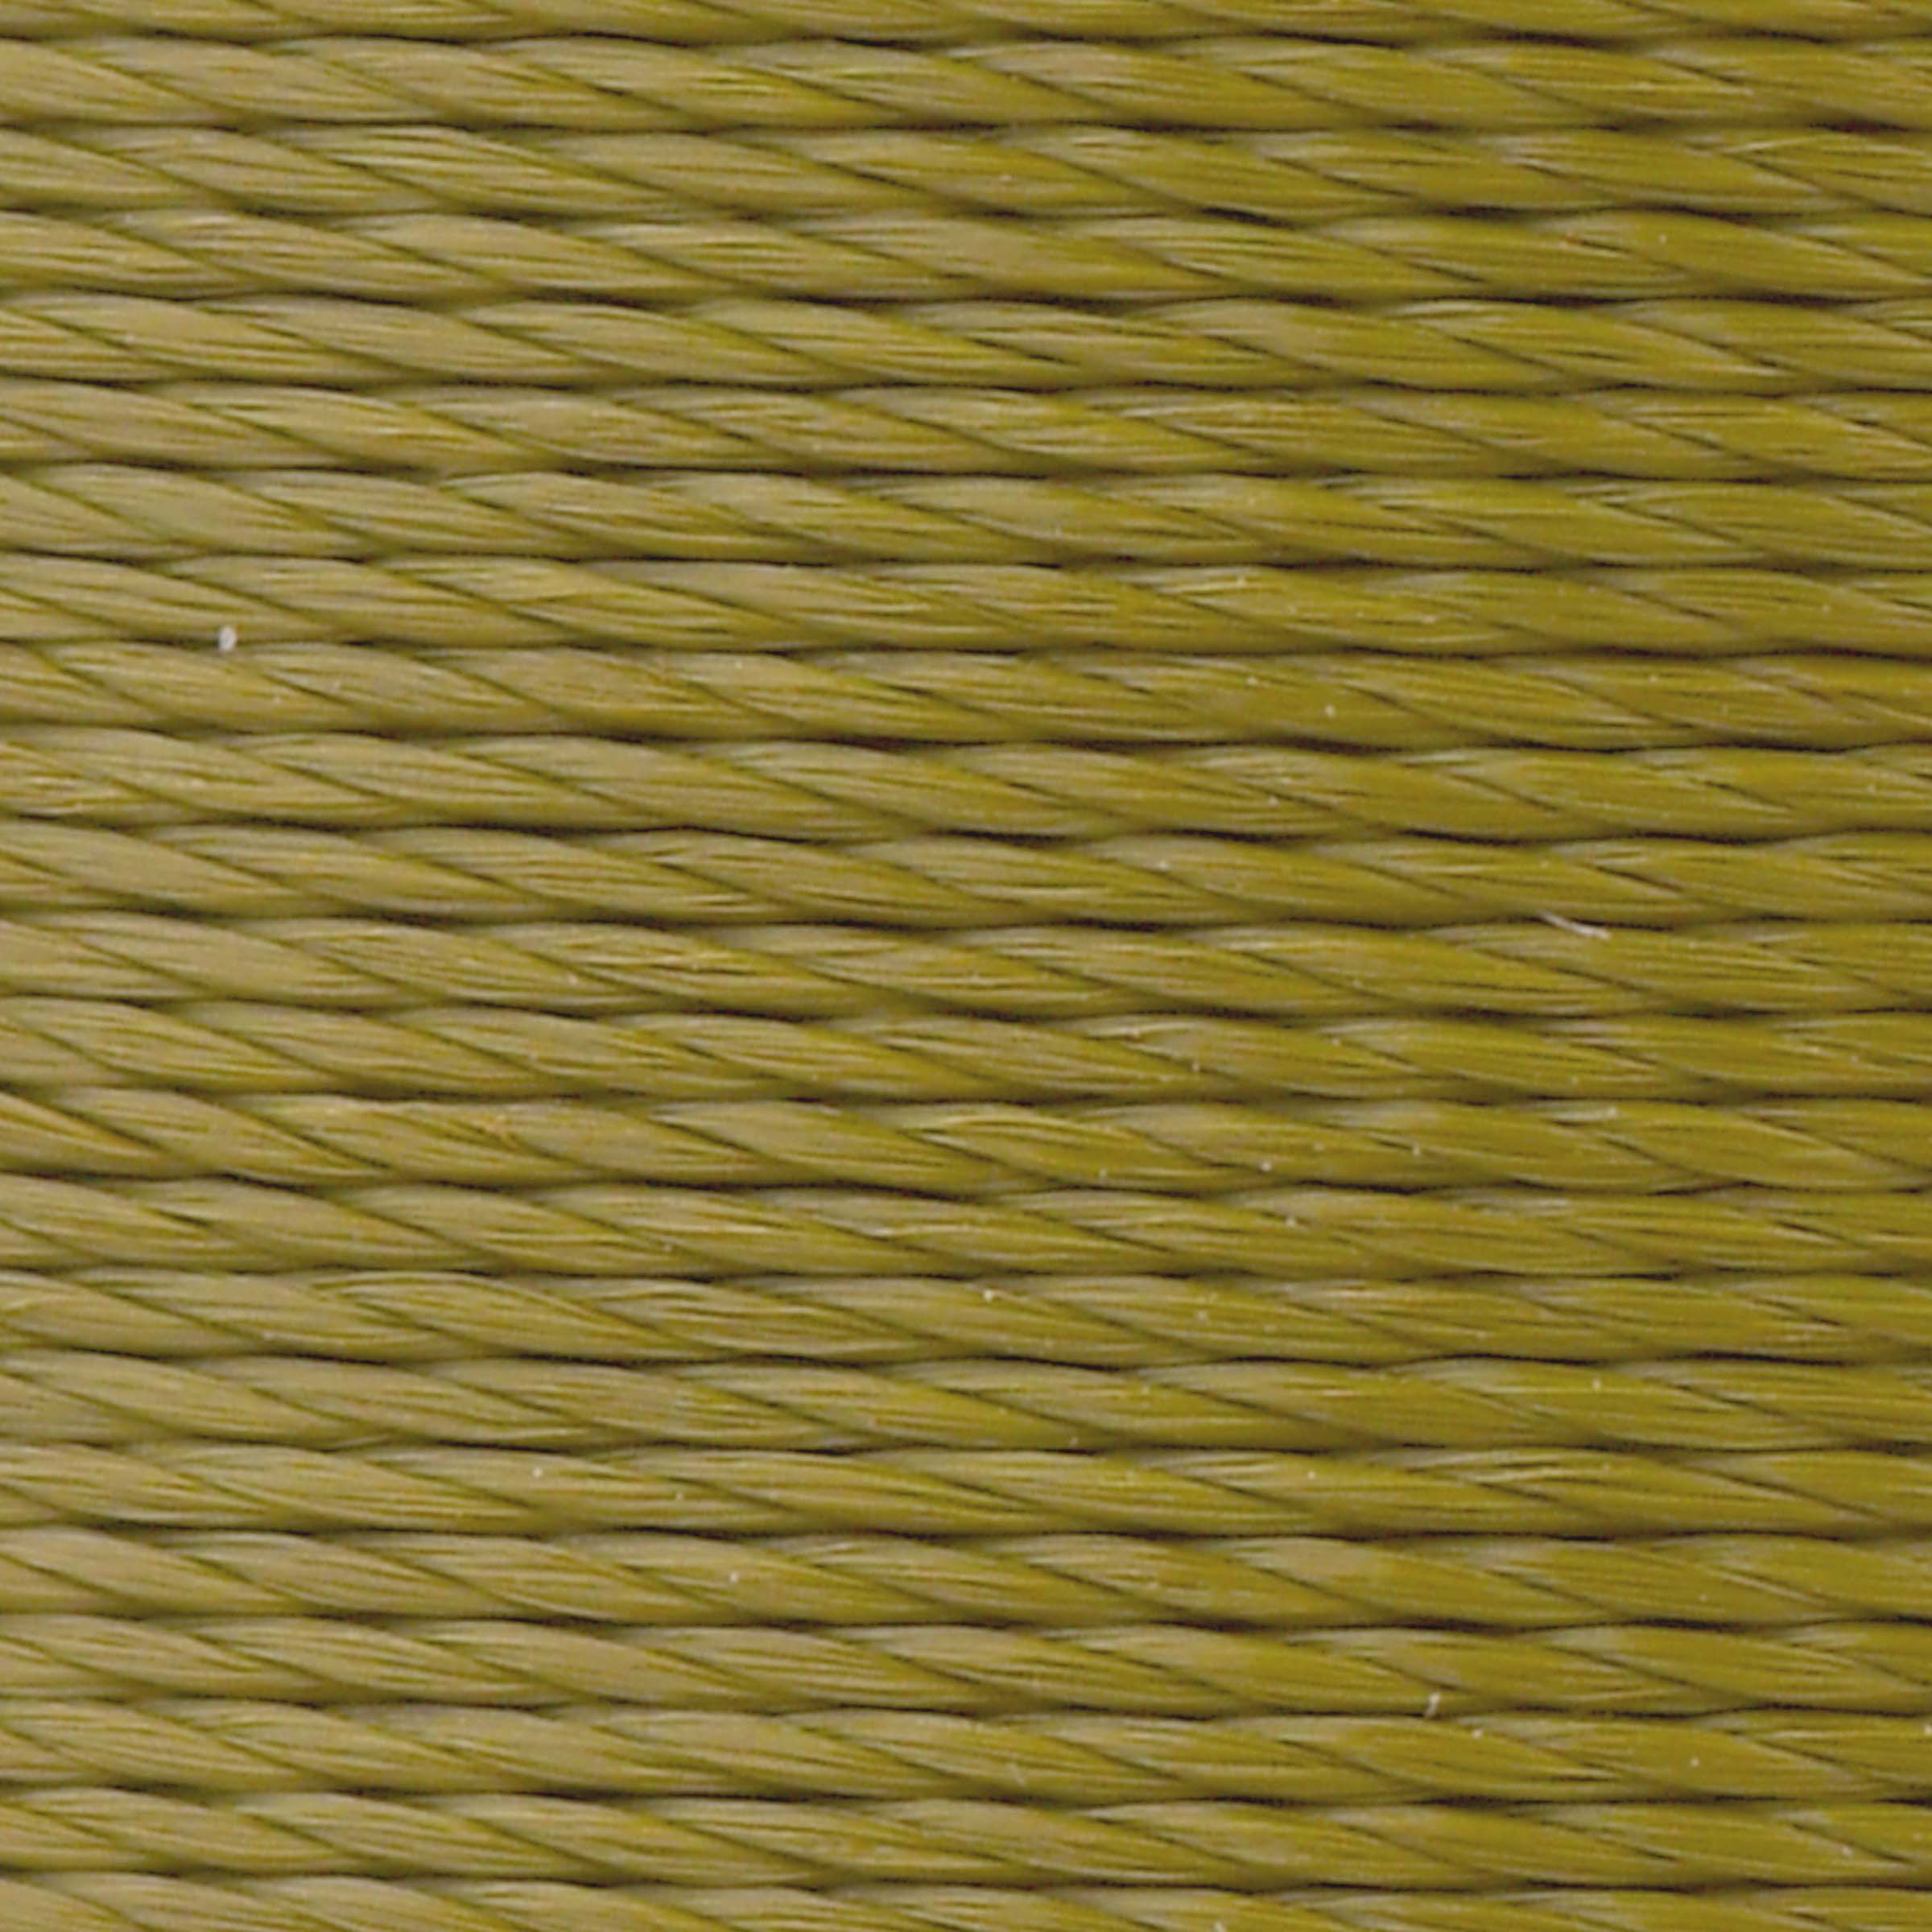 Comparing ColorFast vs Nylon Rod Winding Thread